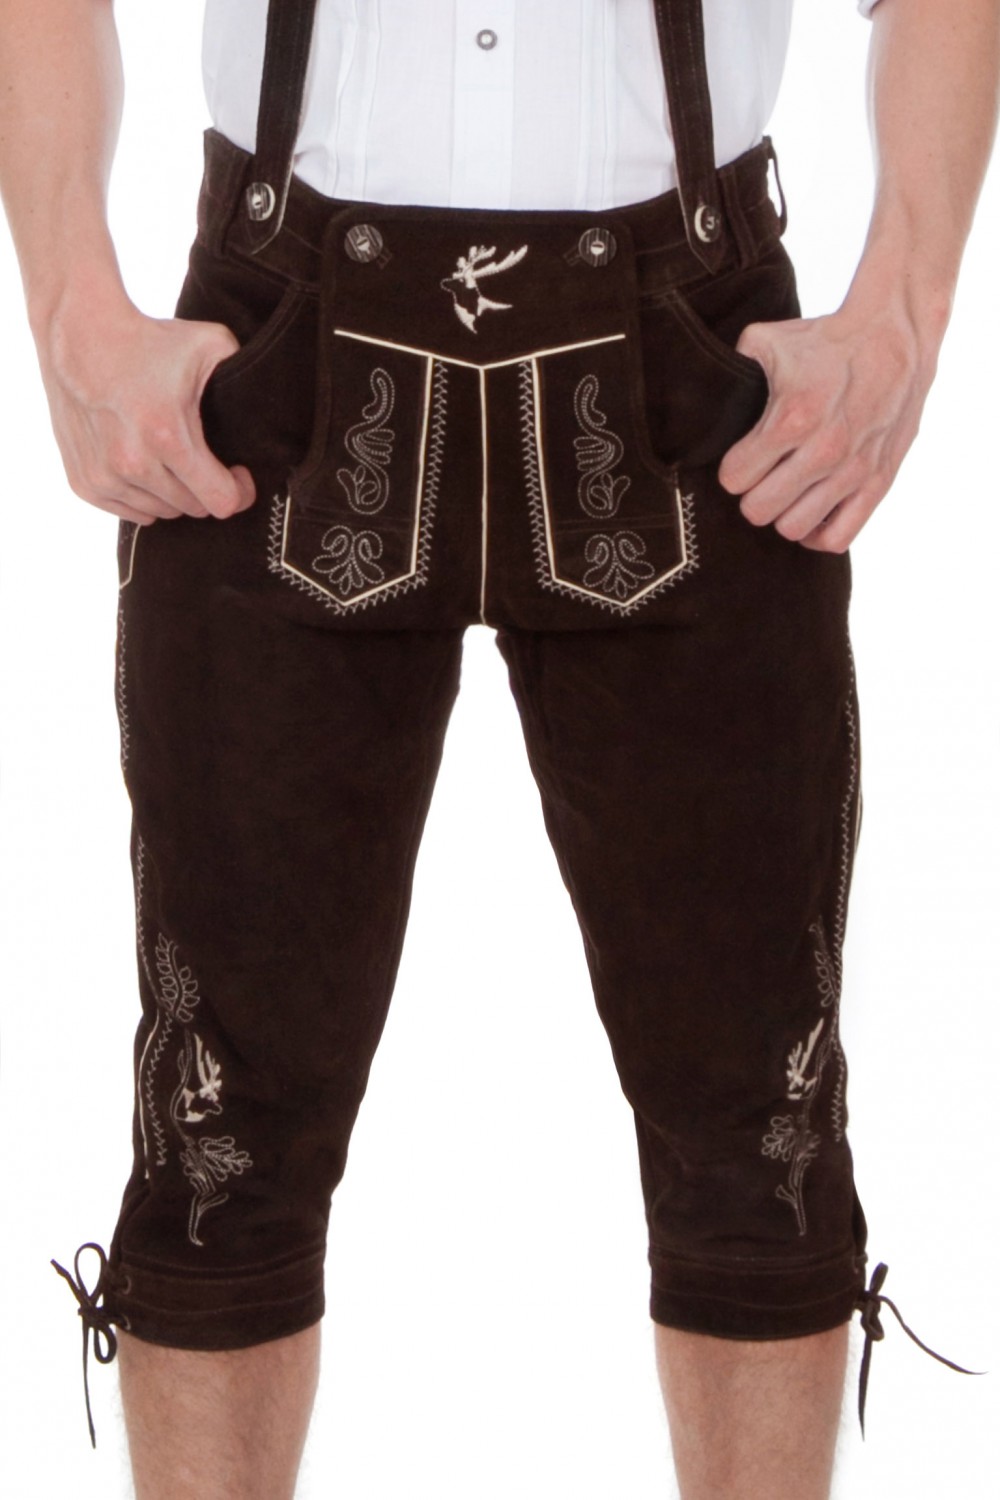 Edelnice Trachtenmode Bavarian Traditional Short Leather Trousers Valentin Lederhosen with Belt 